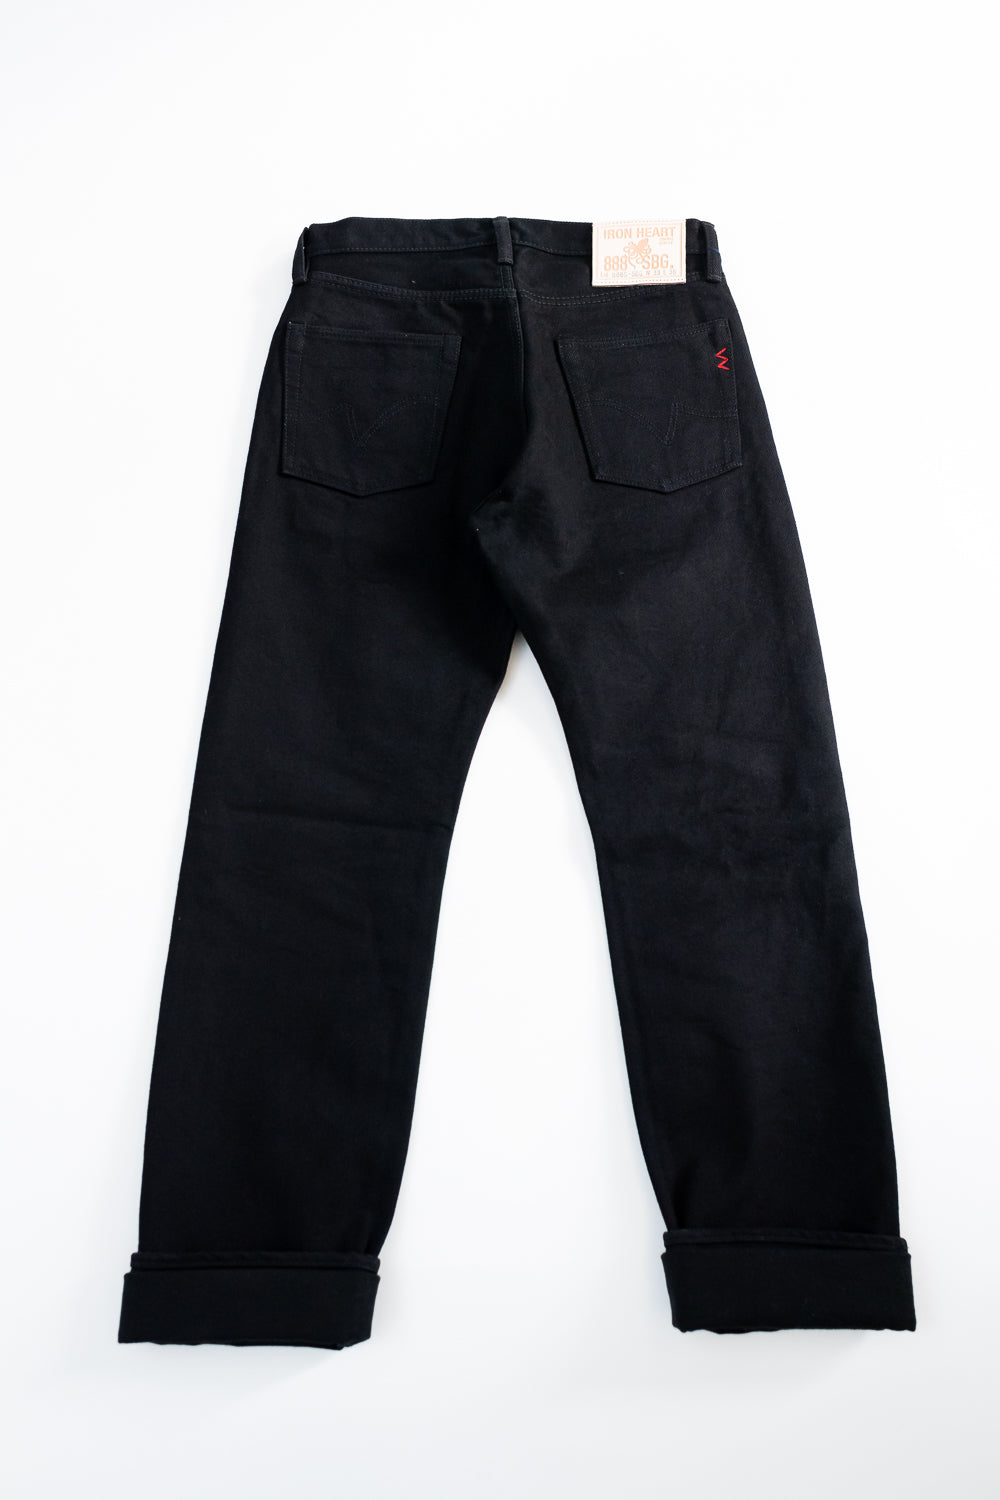 IH-888S-SBG - 21oz Selvedge Denim Medium/High Rise Tapered Cut Jeans - Superblack (Fades to Grey)